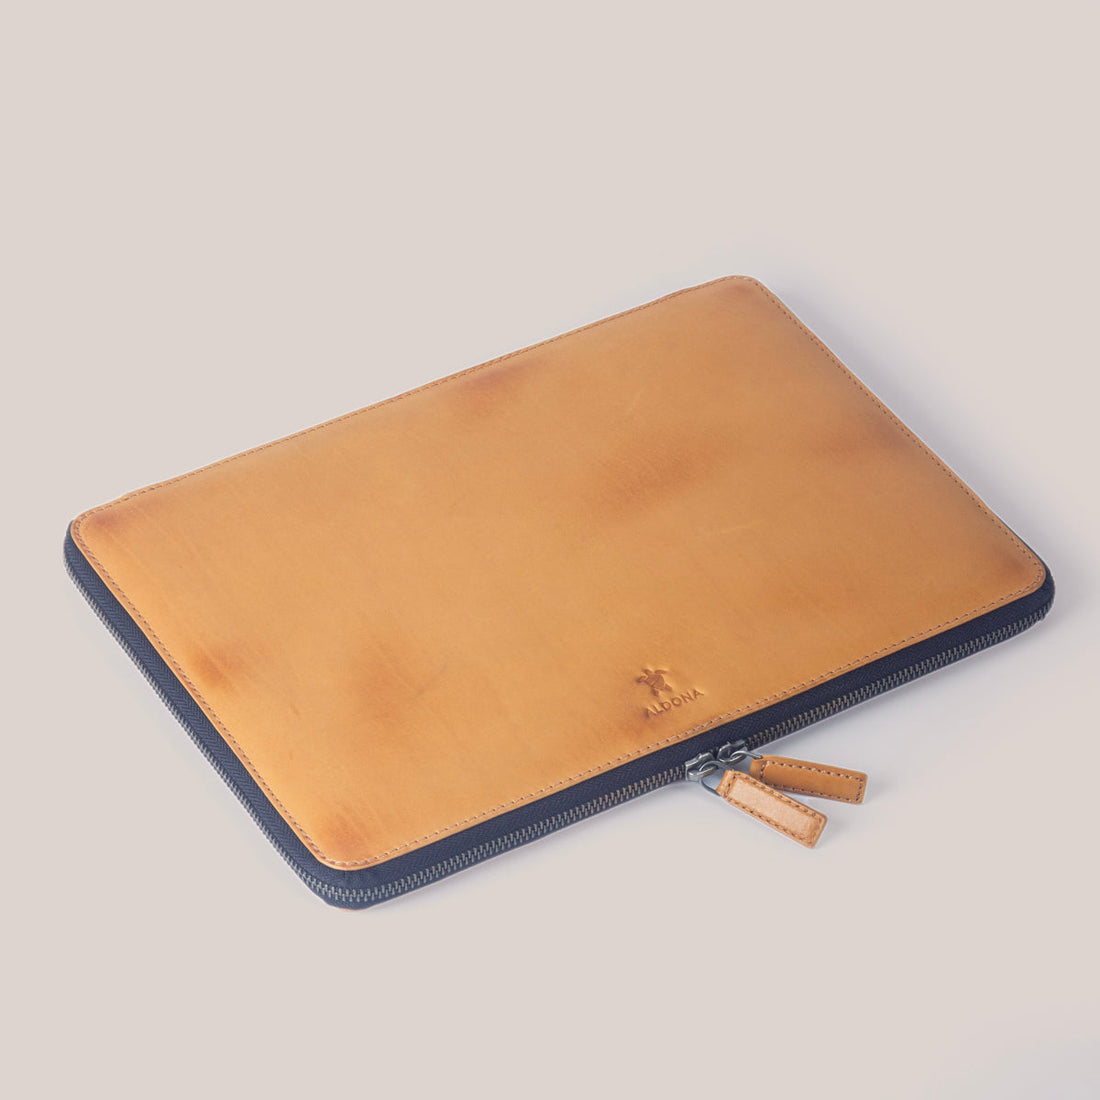 MacBook Pro 14 Zippered Laptop Case - Onyx Black